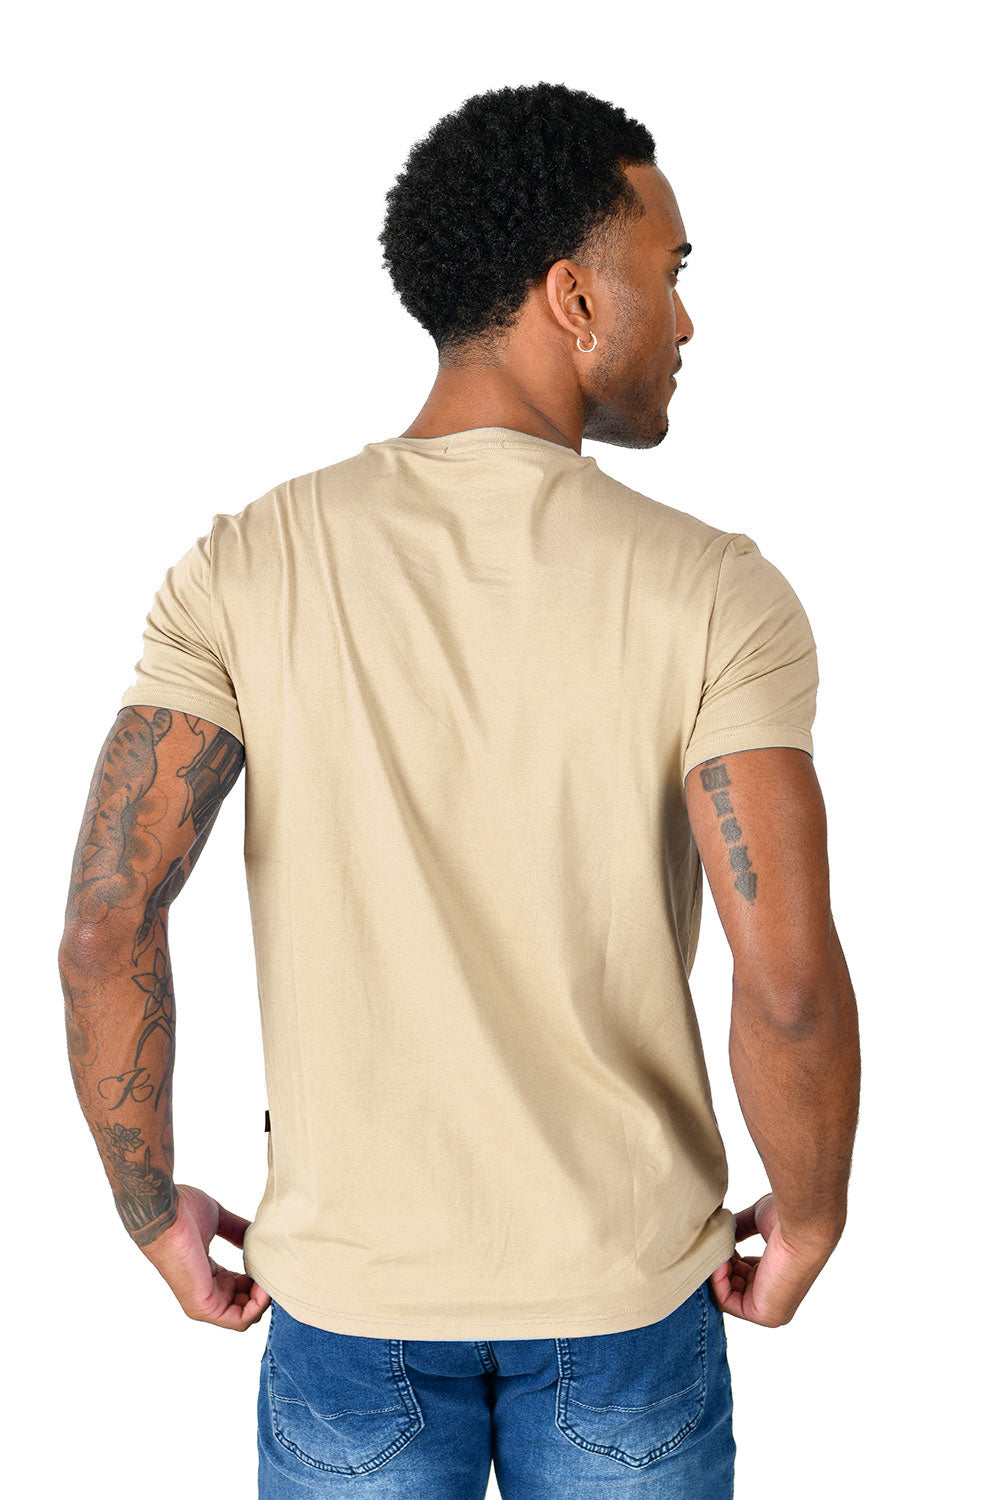 BARABAS Men's Basic Solid Color Premium Crew-Neck T-shirts ST933 Natural